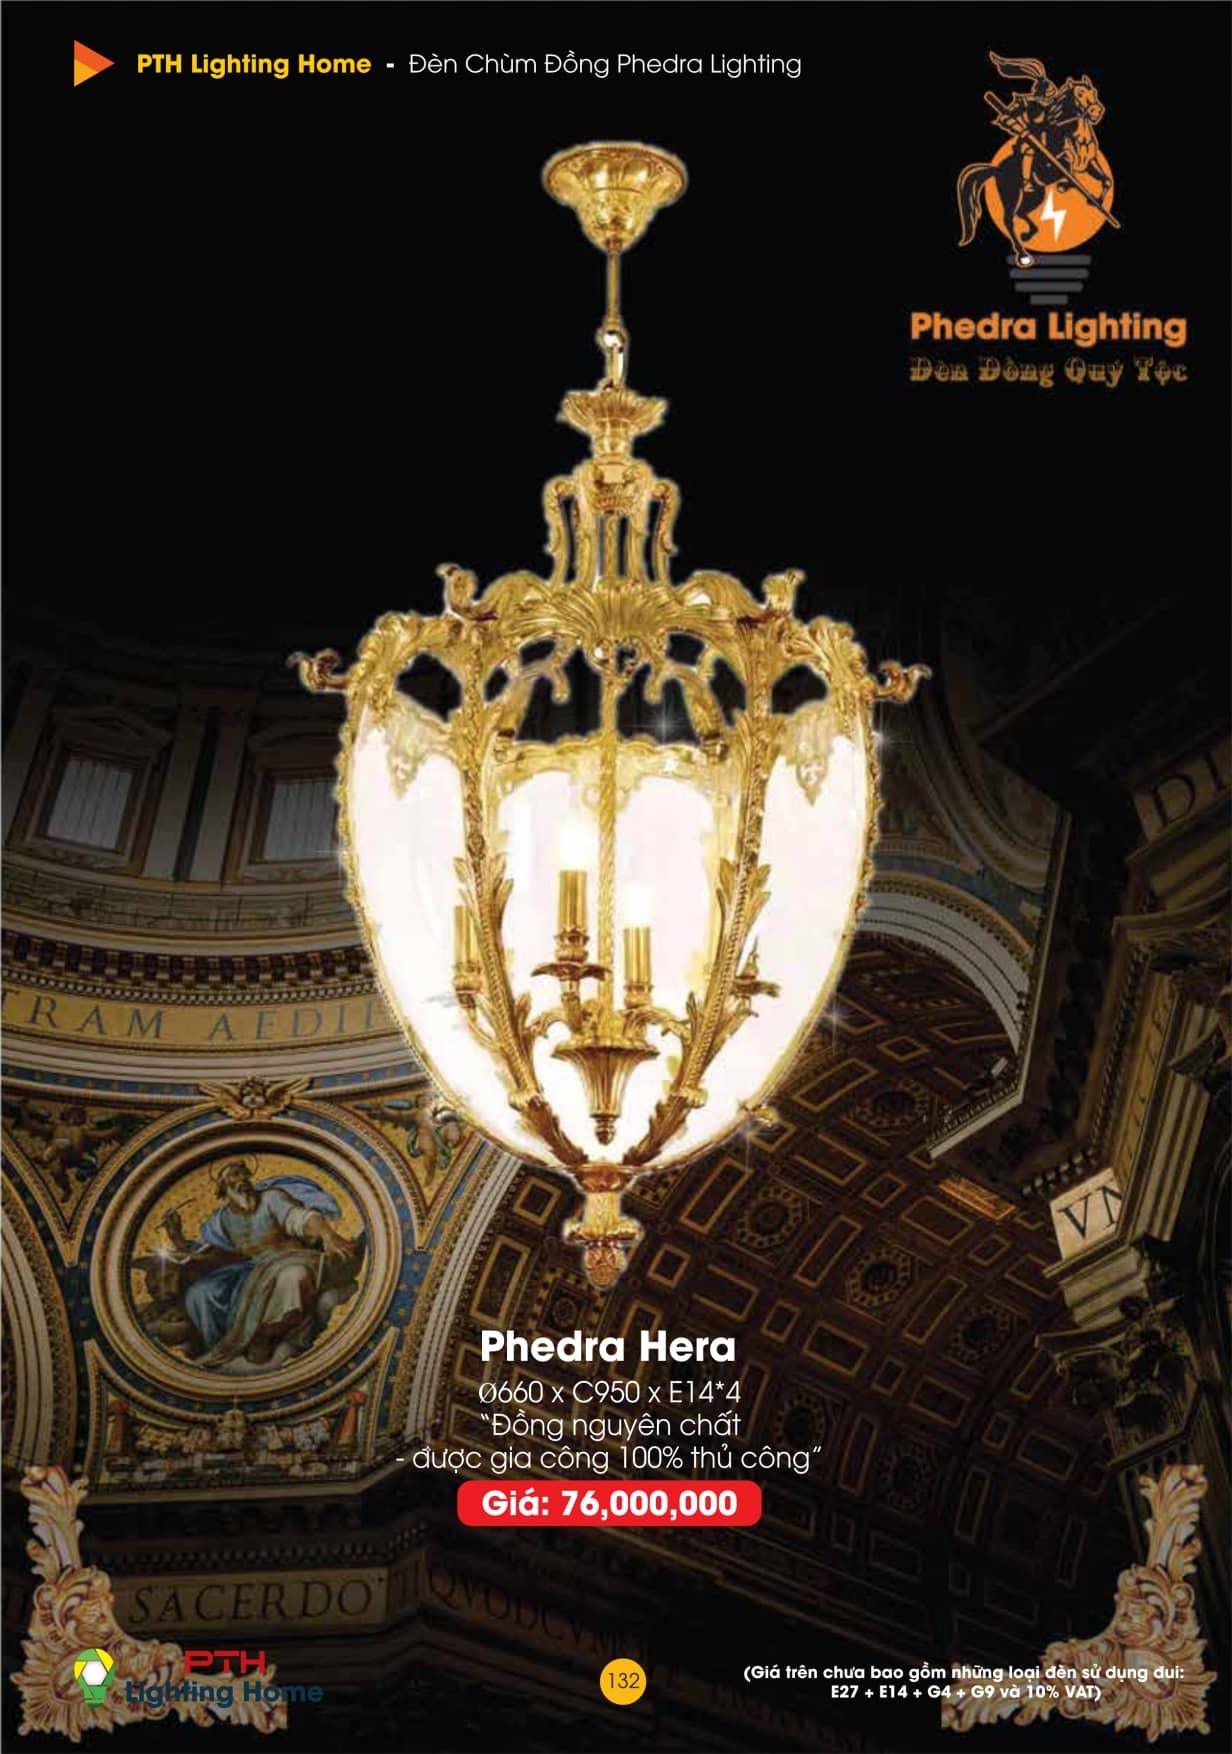 catalogue-bang-gia-den-led-trang-tri-pth-lighting-home-134